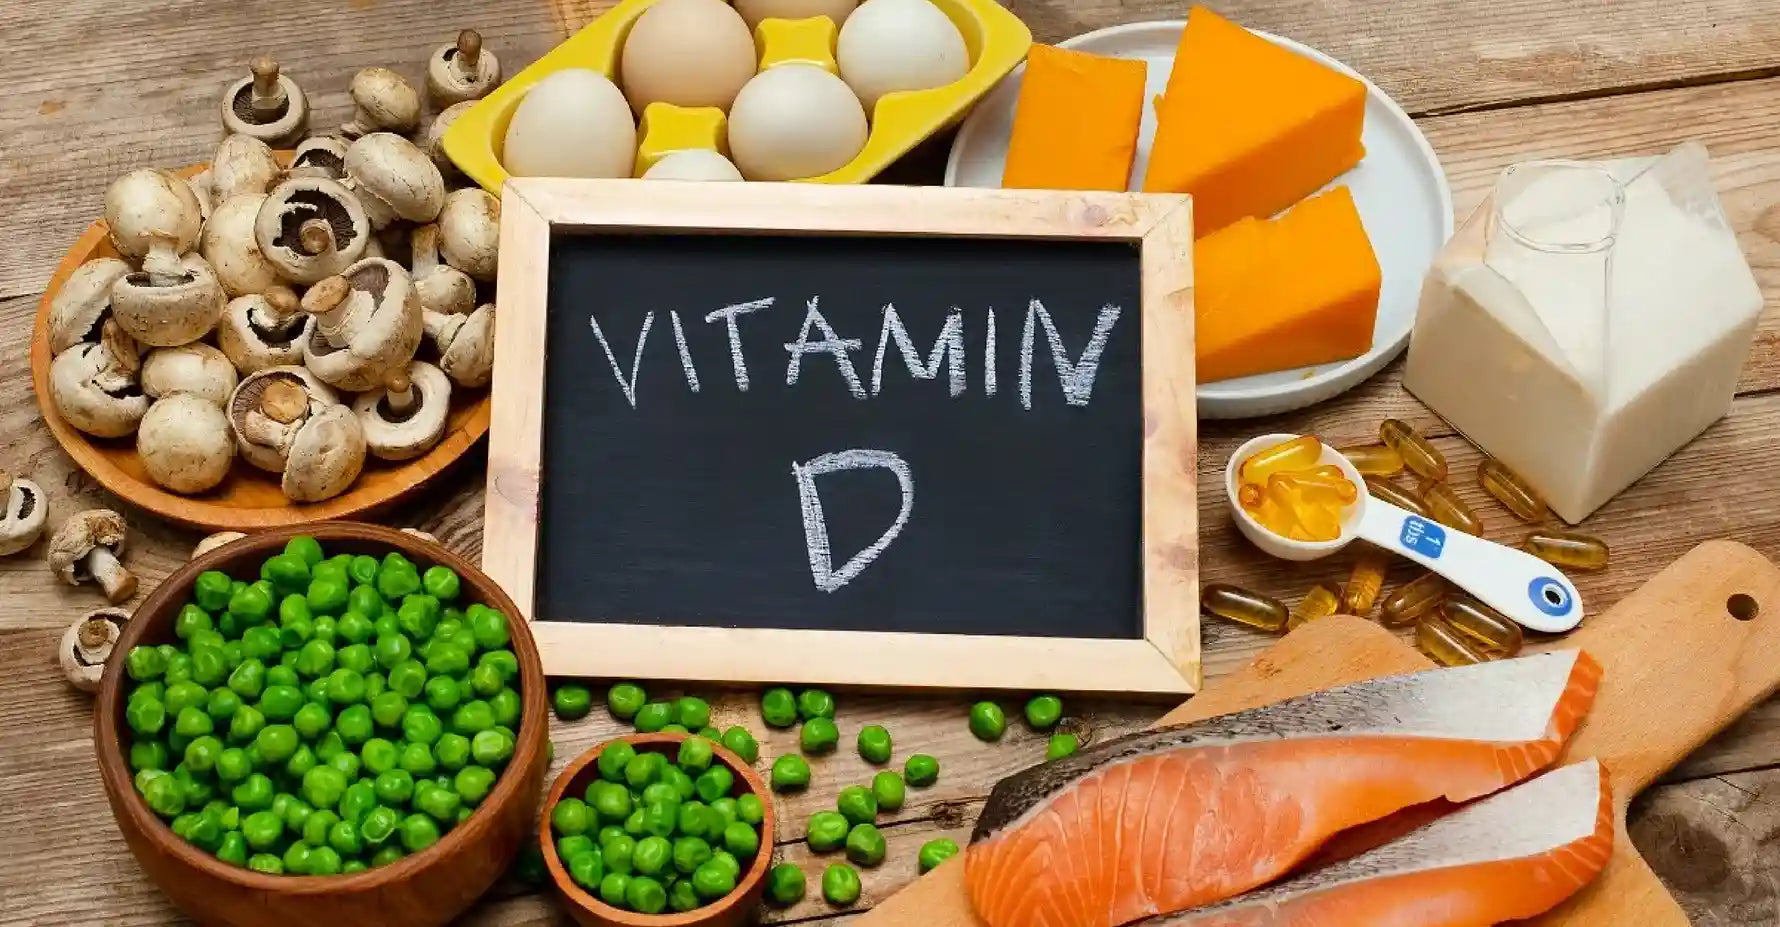 Vitamin D Rich Food